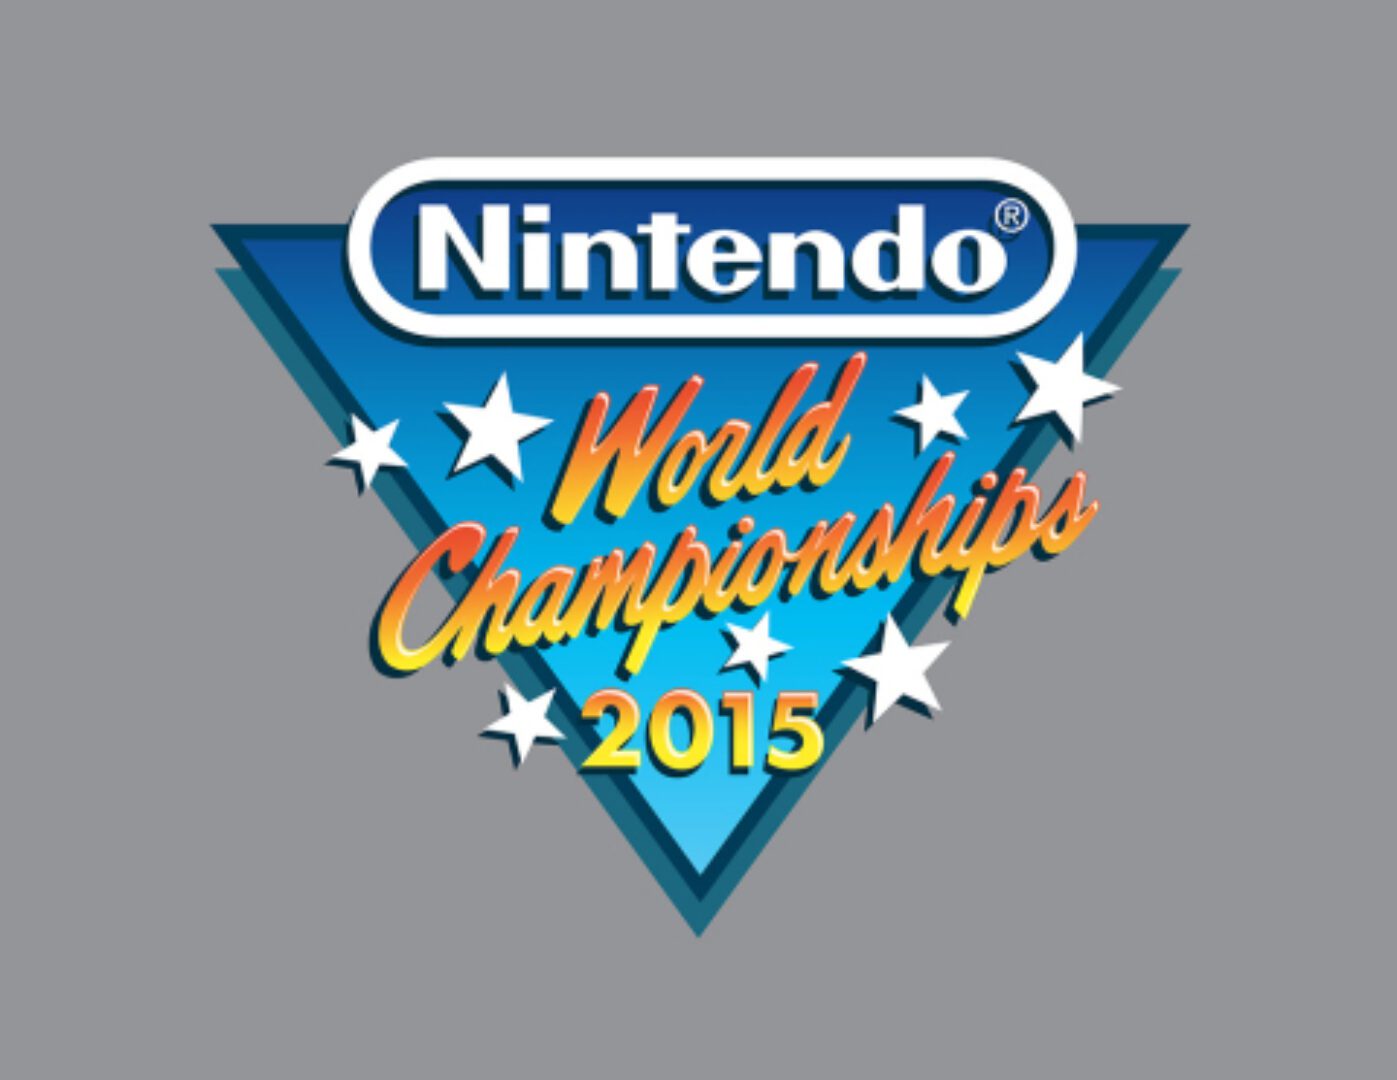 Nintendo World Championships Returning!